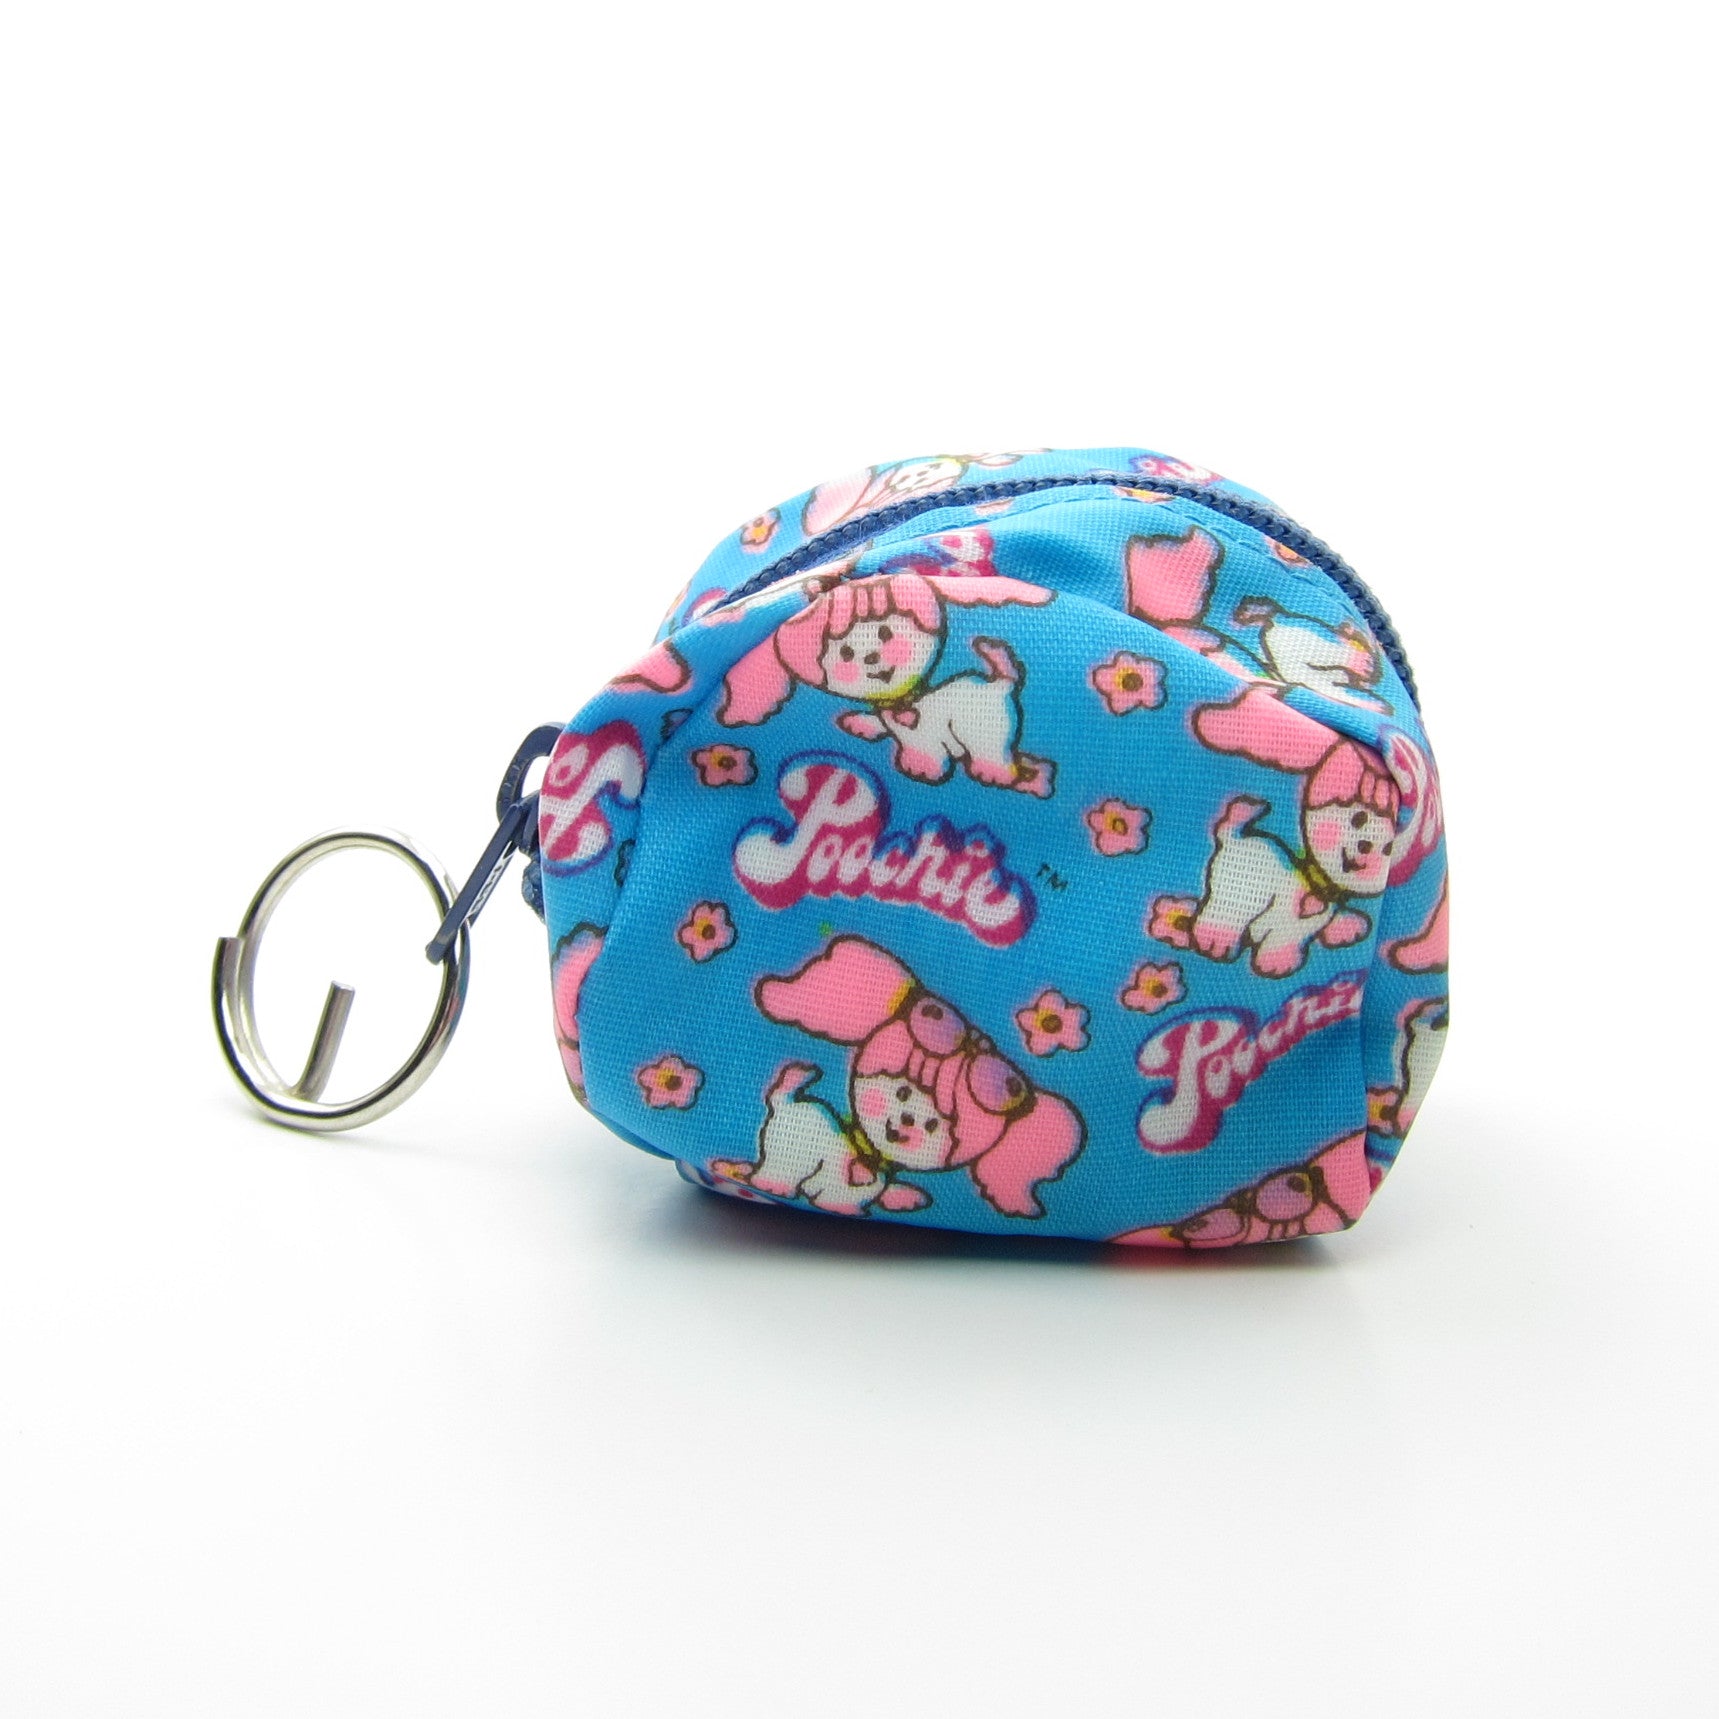 Handbags | Avon | Freeup